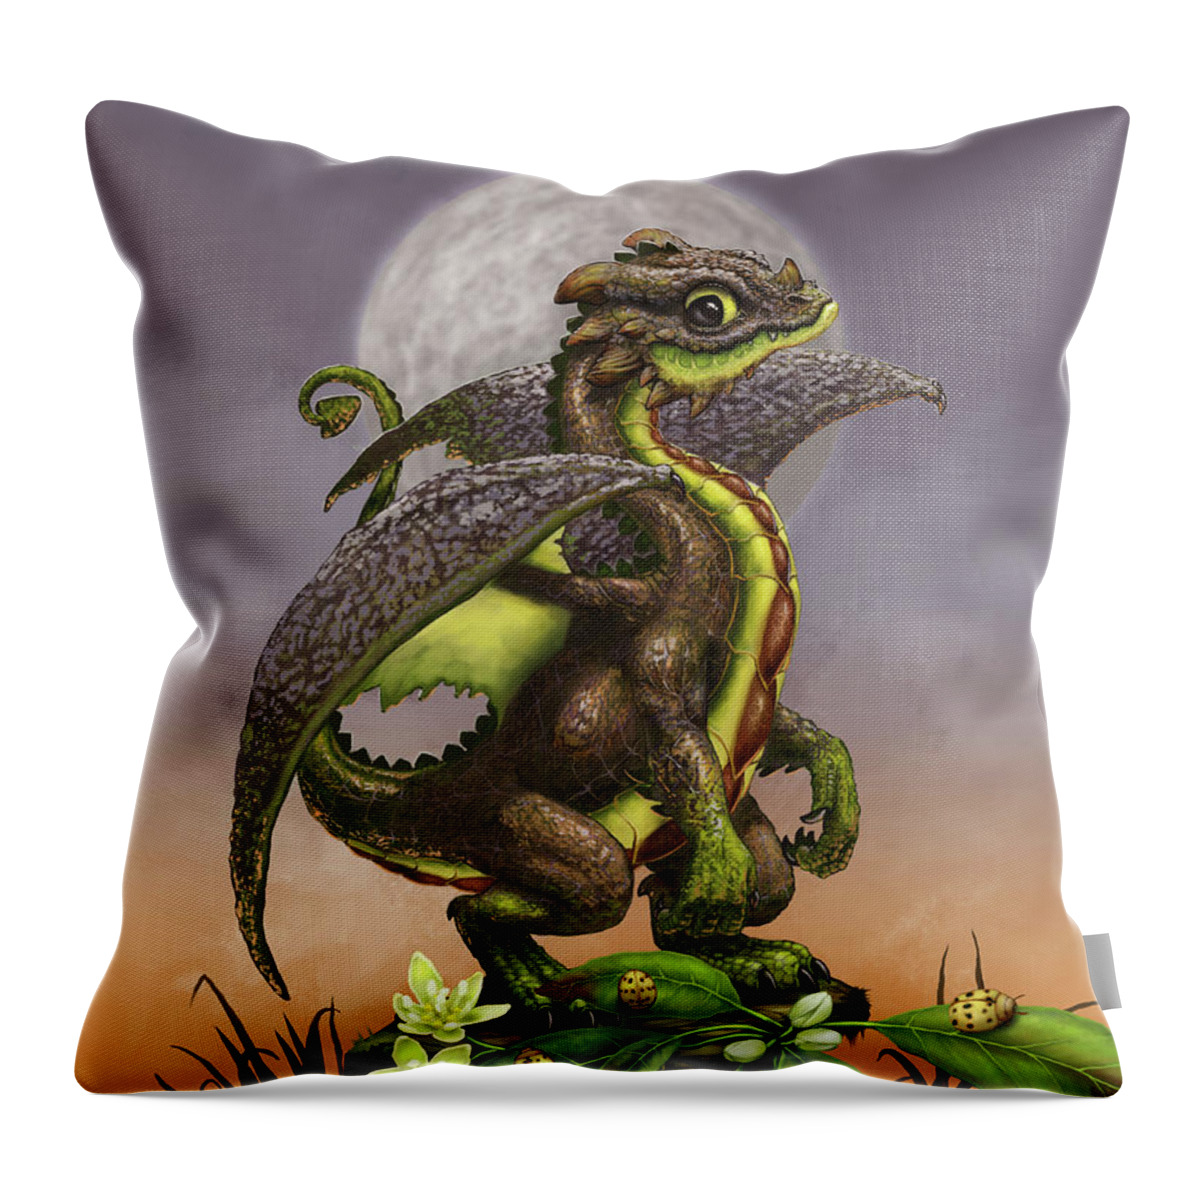 Avocado Throw Pillow featuring the digital art Avocado Dragon by Stanley Morrison